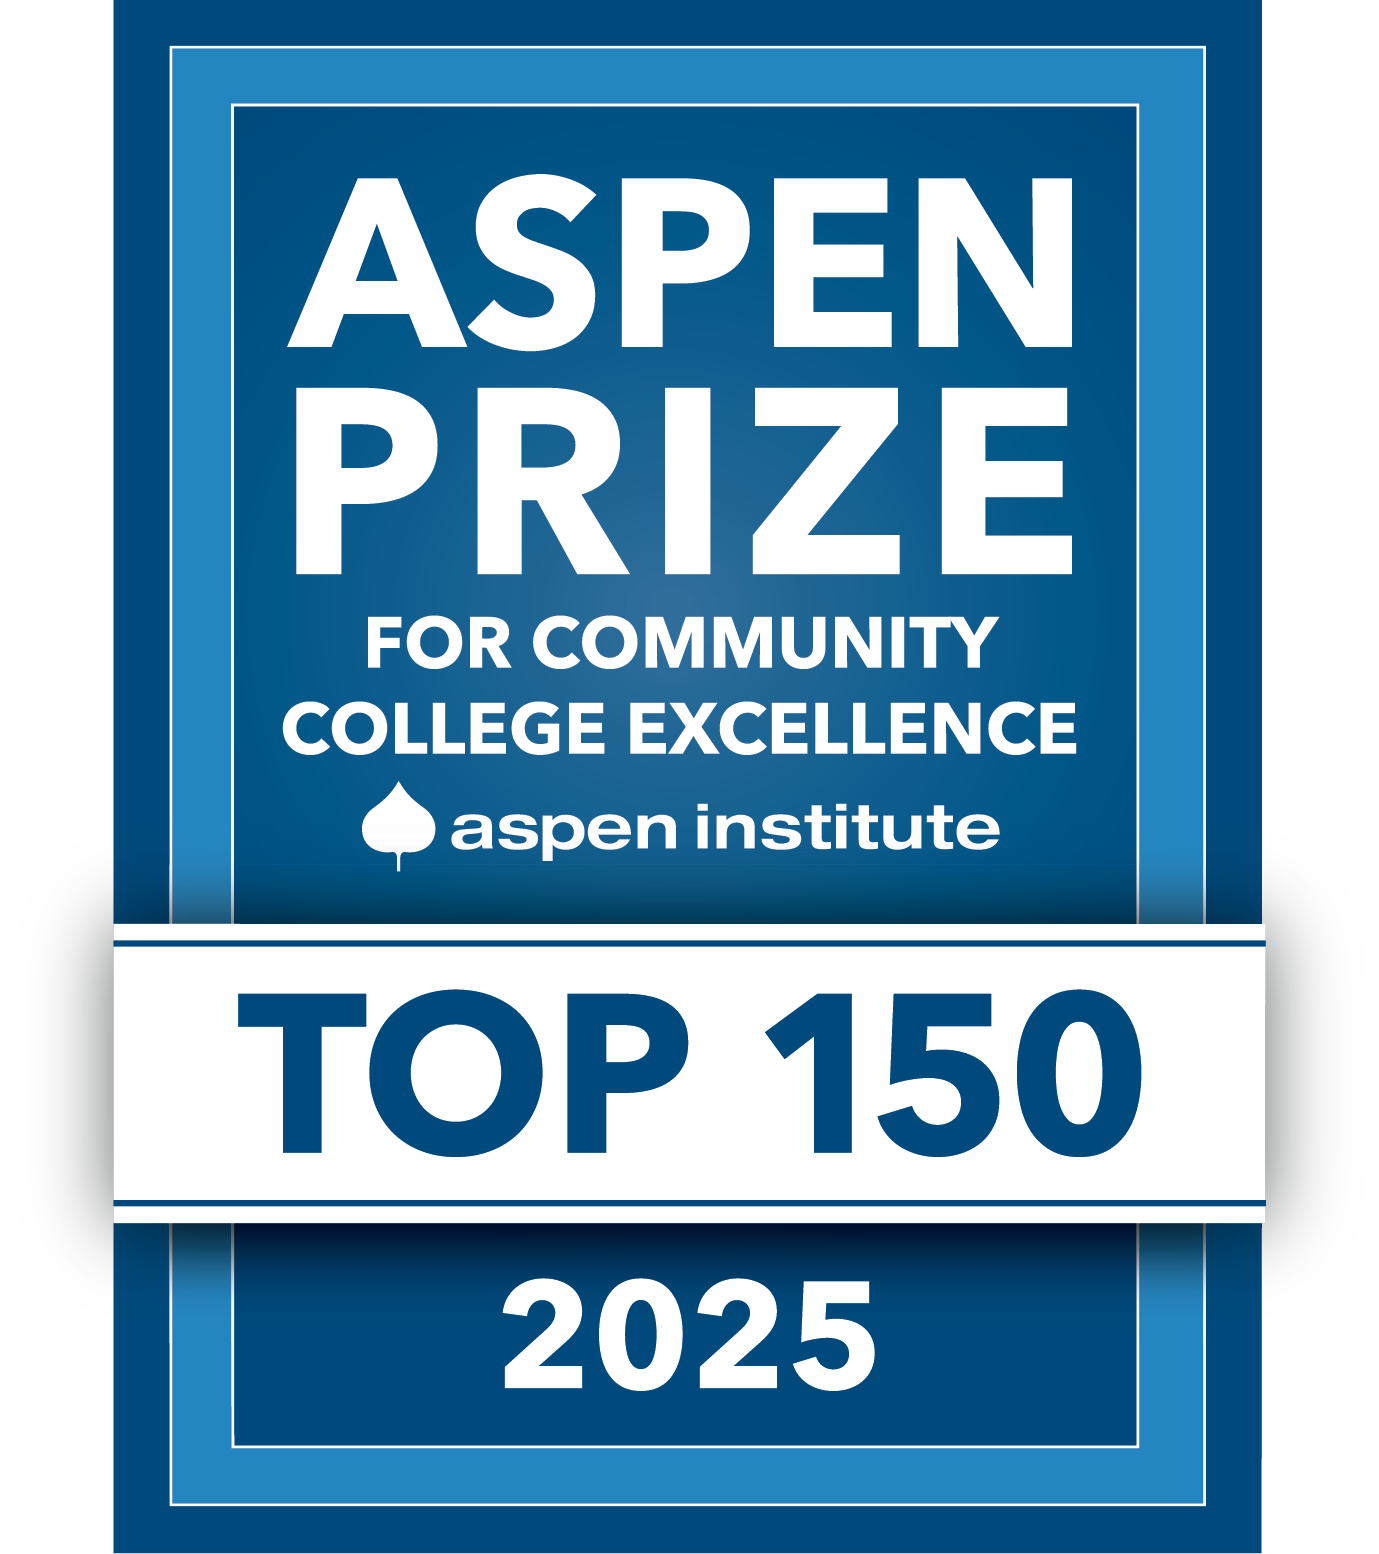 aspen-prize_top-150.png